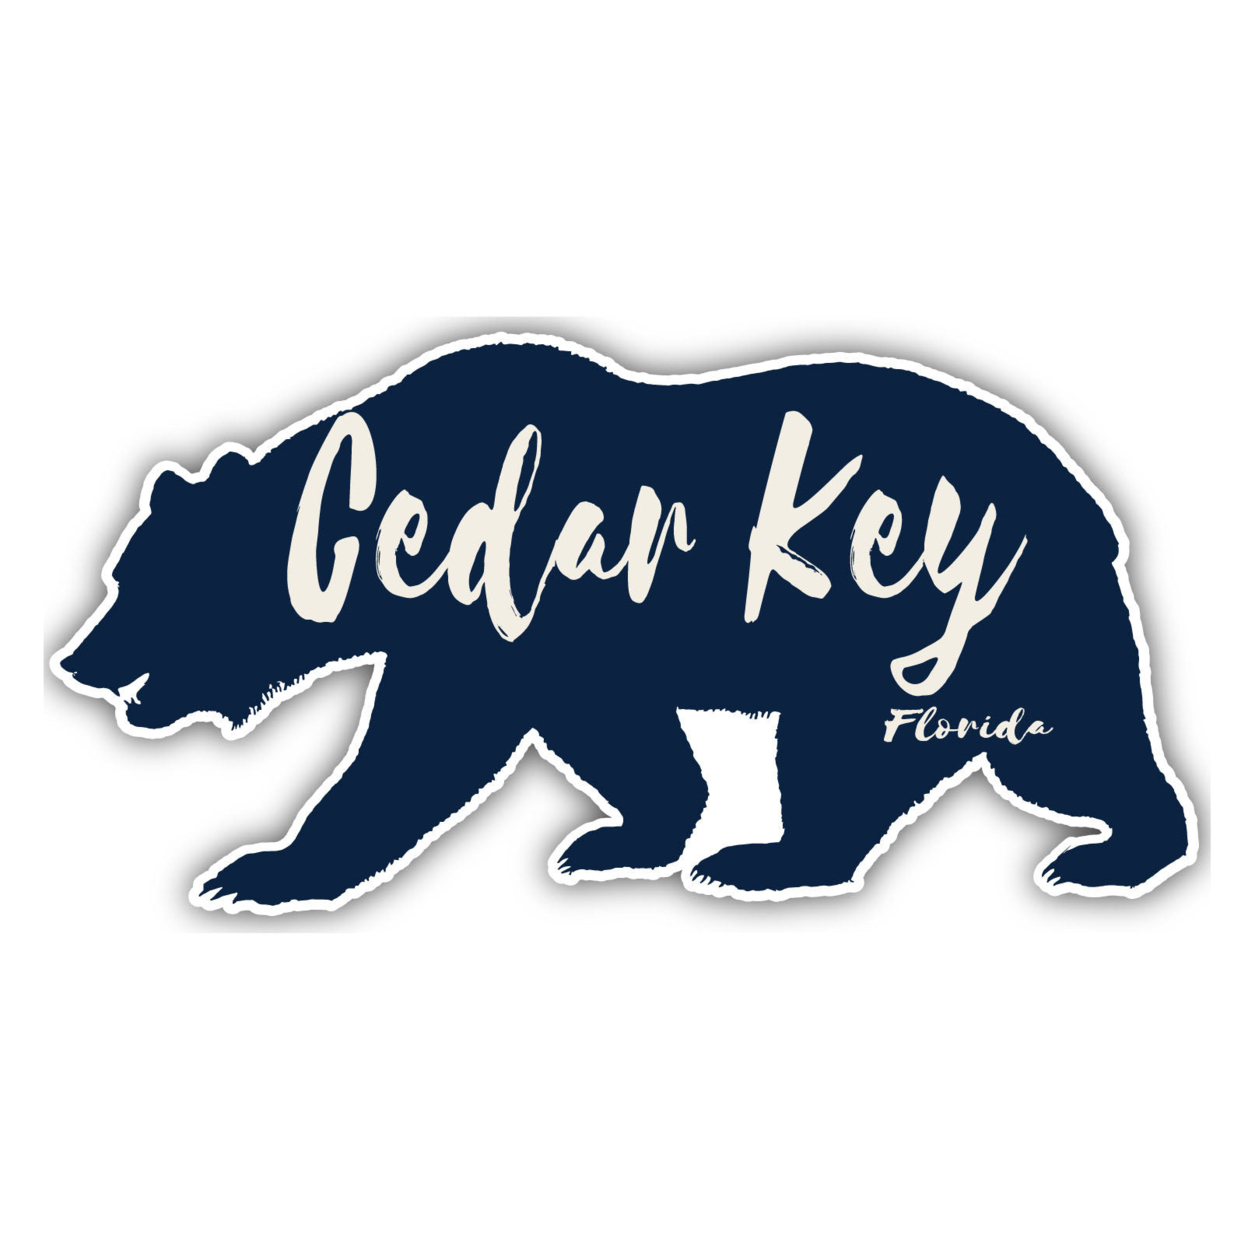 Cedar Key Florida Souvenir Decorative Stickers (Choose Theme And Size) - 4-Pack, 4-Inch, Tent